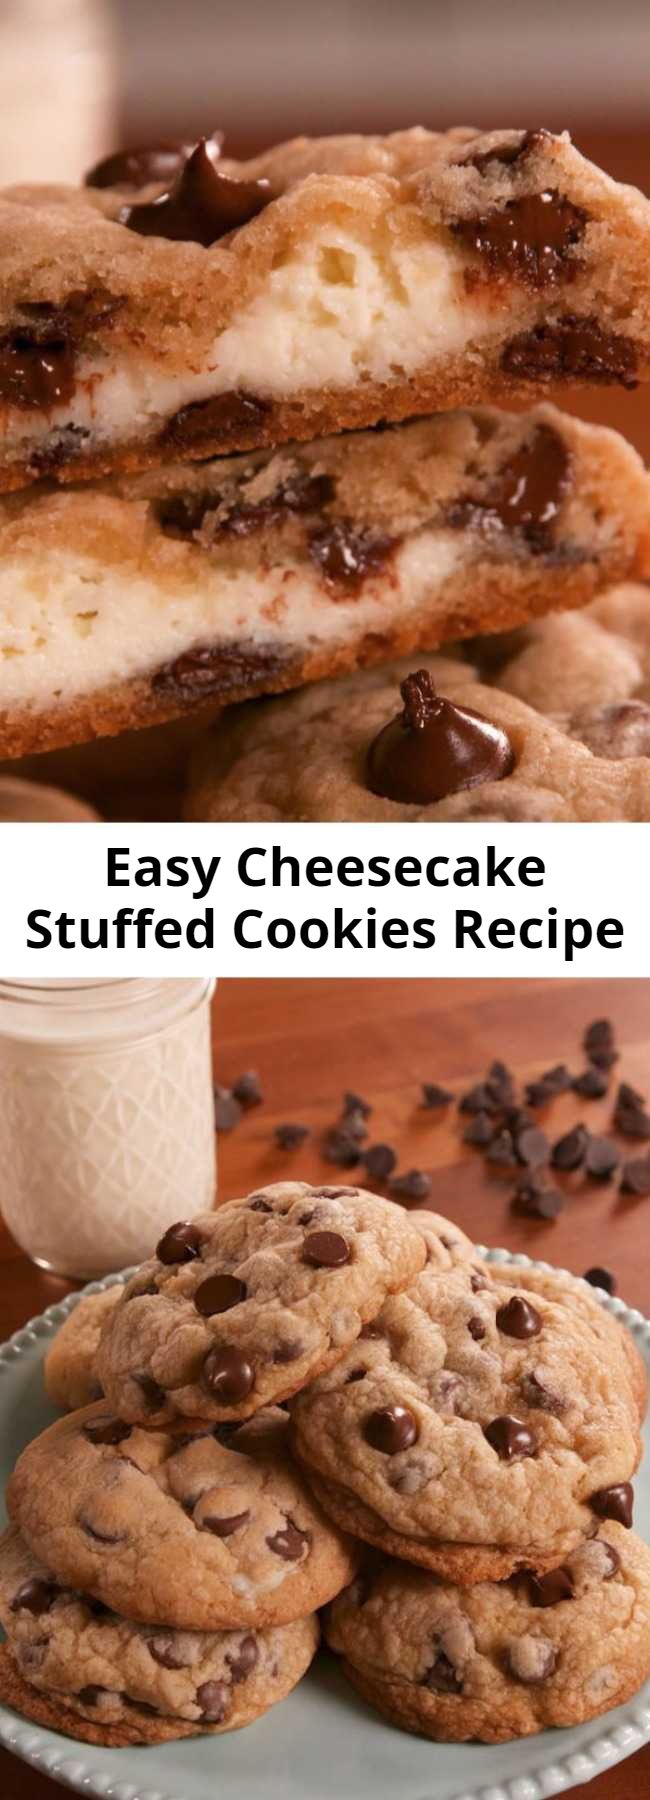 Easy Cheesecake Stuffed Cookies Recipe - Have your cheesecake and your cookie too. #food #easyrecipe #baking #dessert #cookies